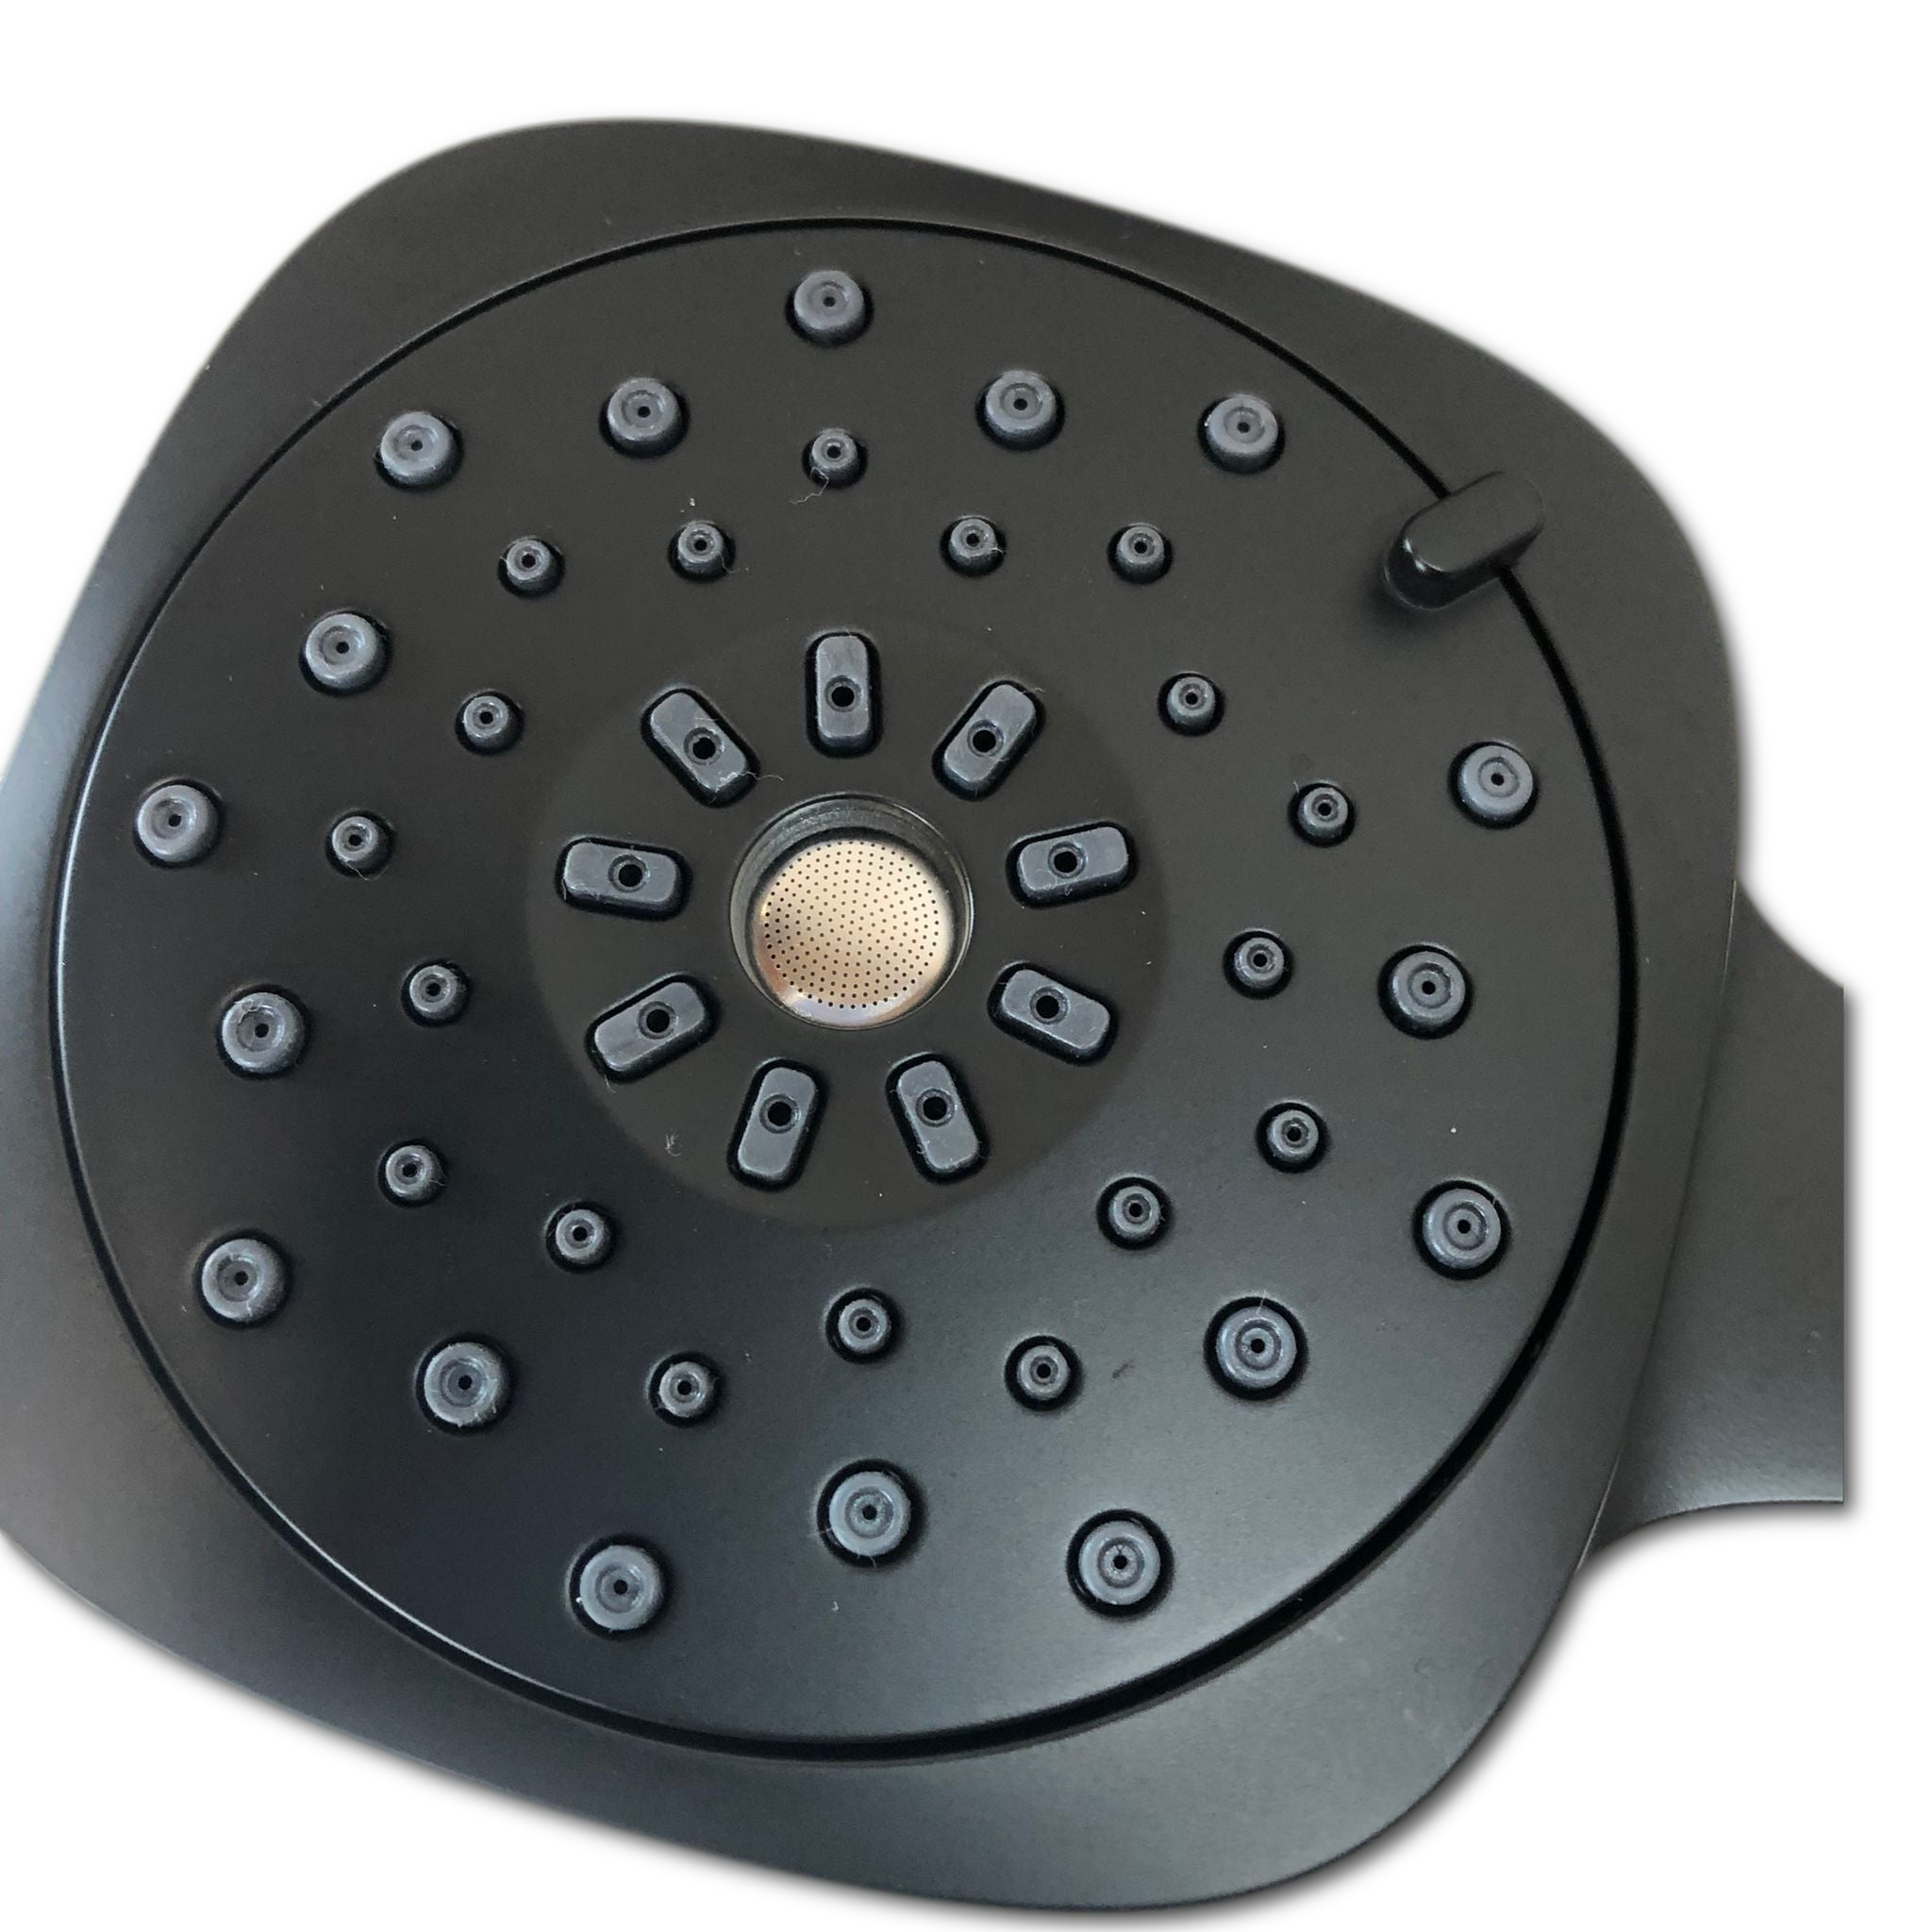 Kohler Adjuste 3-in-1 Multifunction Shower Kit